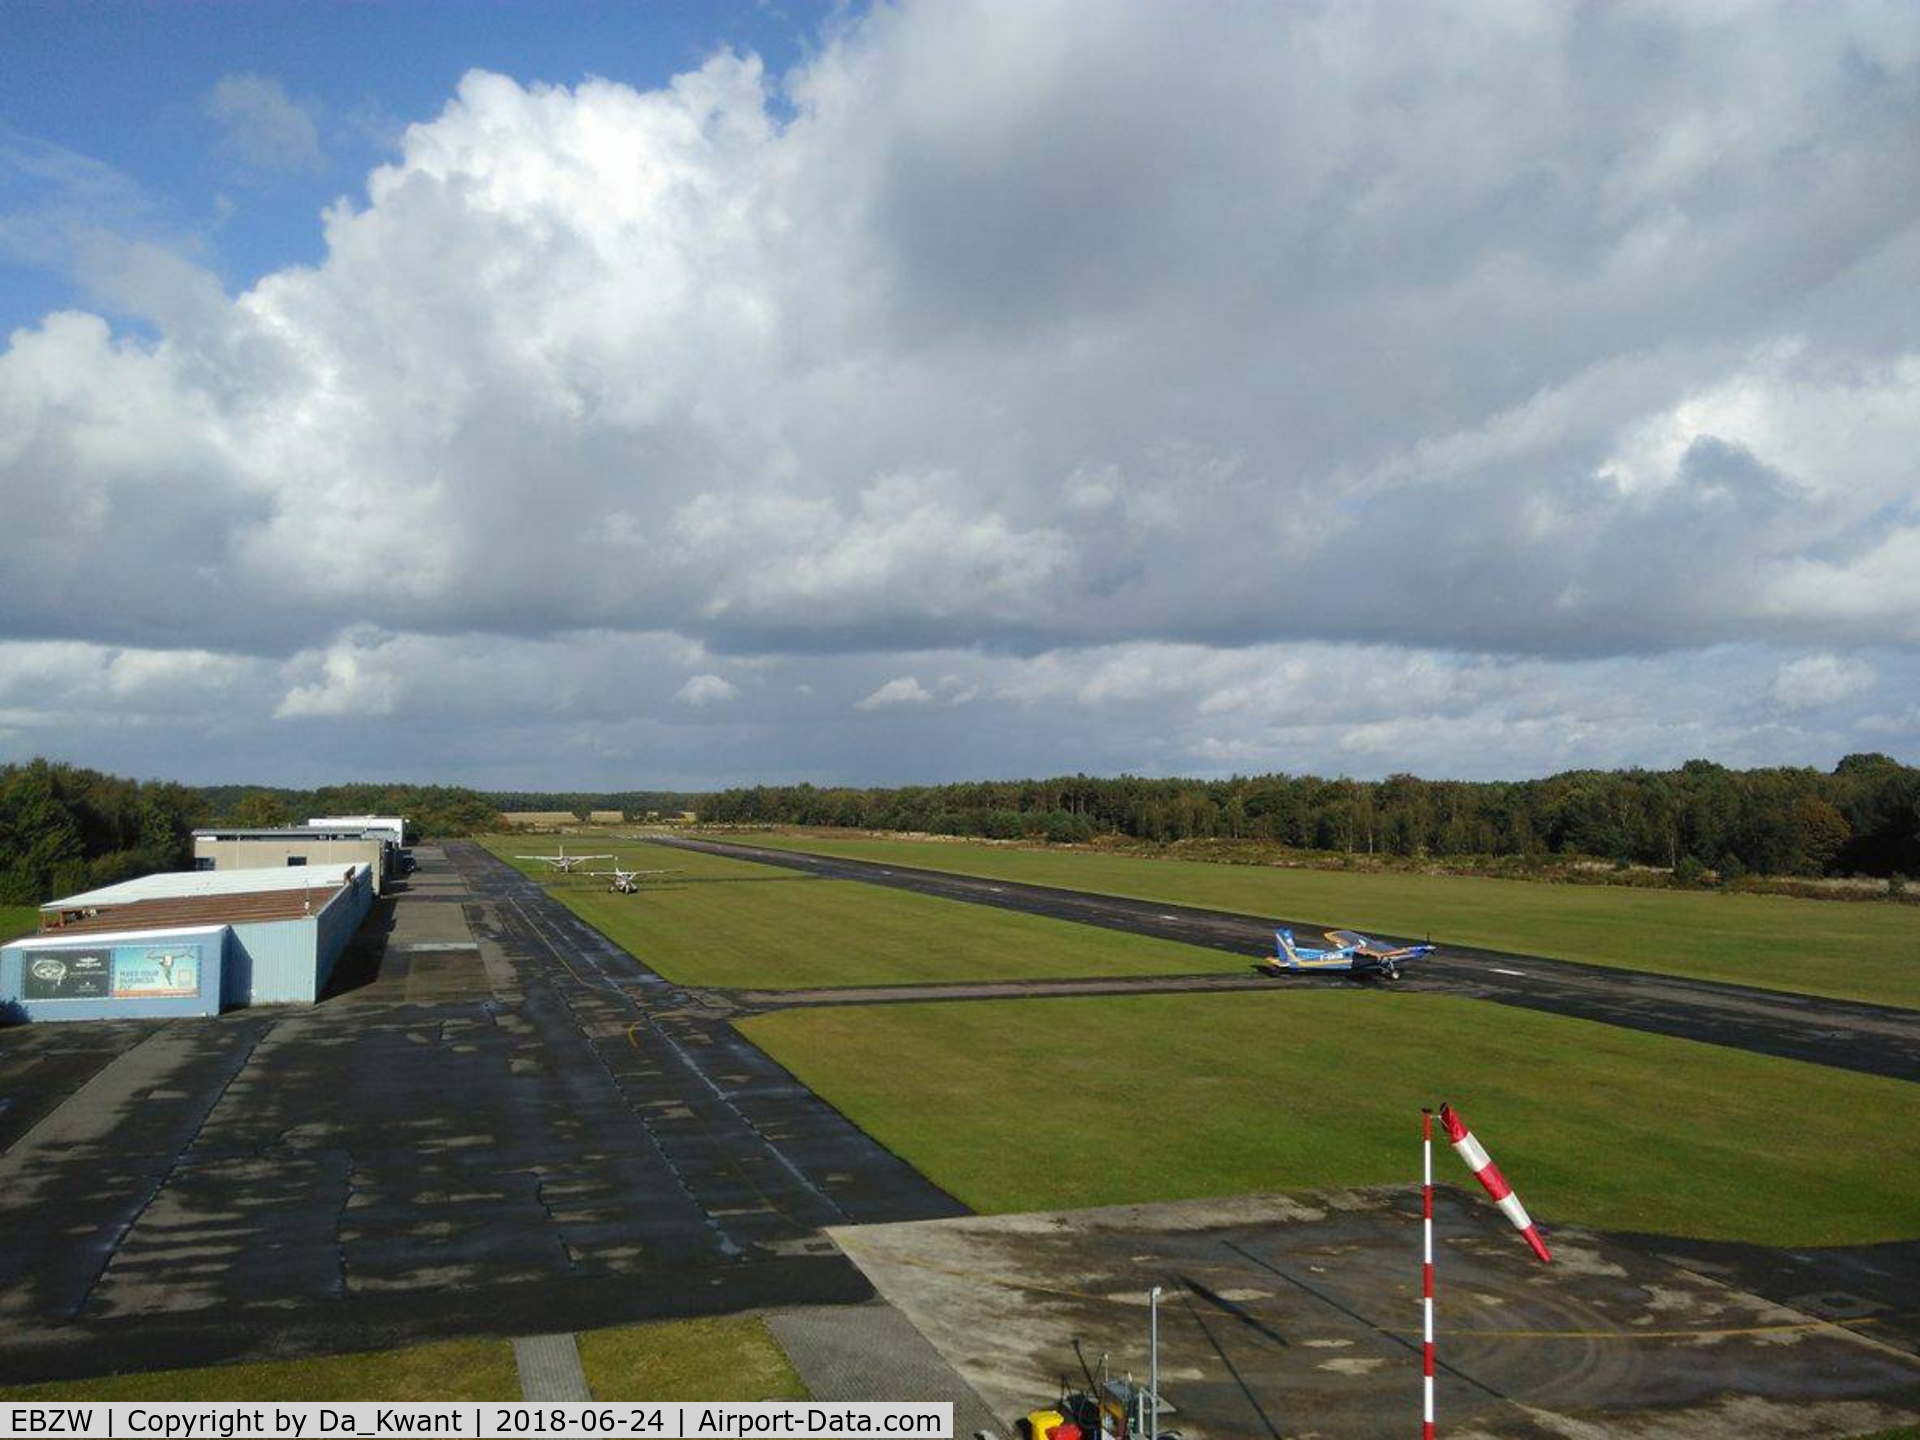 Zwartberg Airport, Genk Belgium (EBZW) - The view from the tower